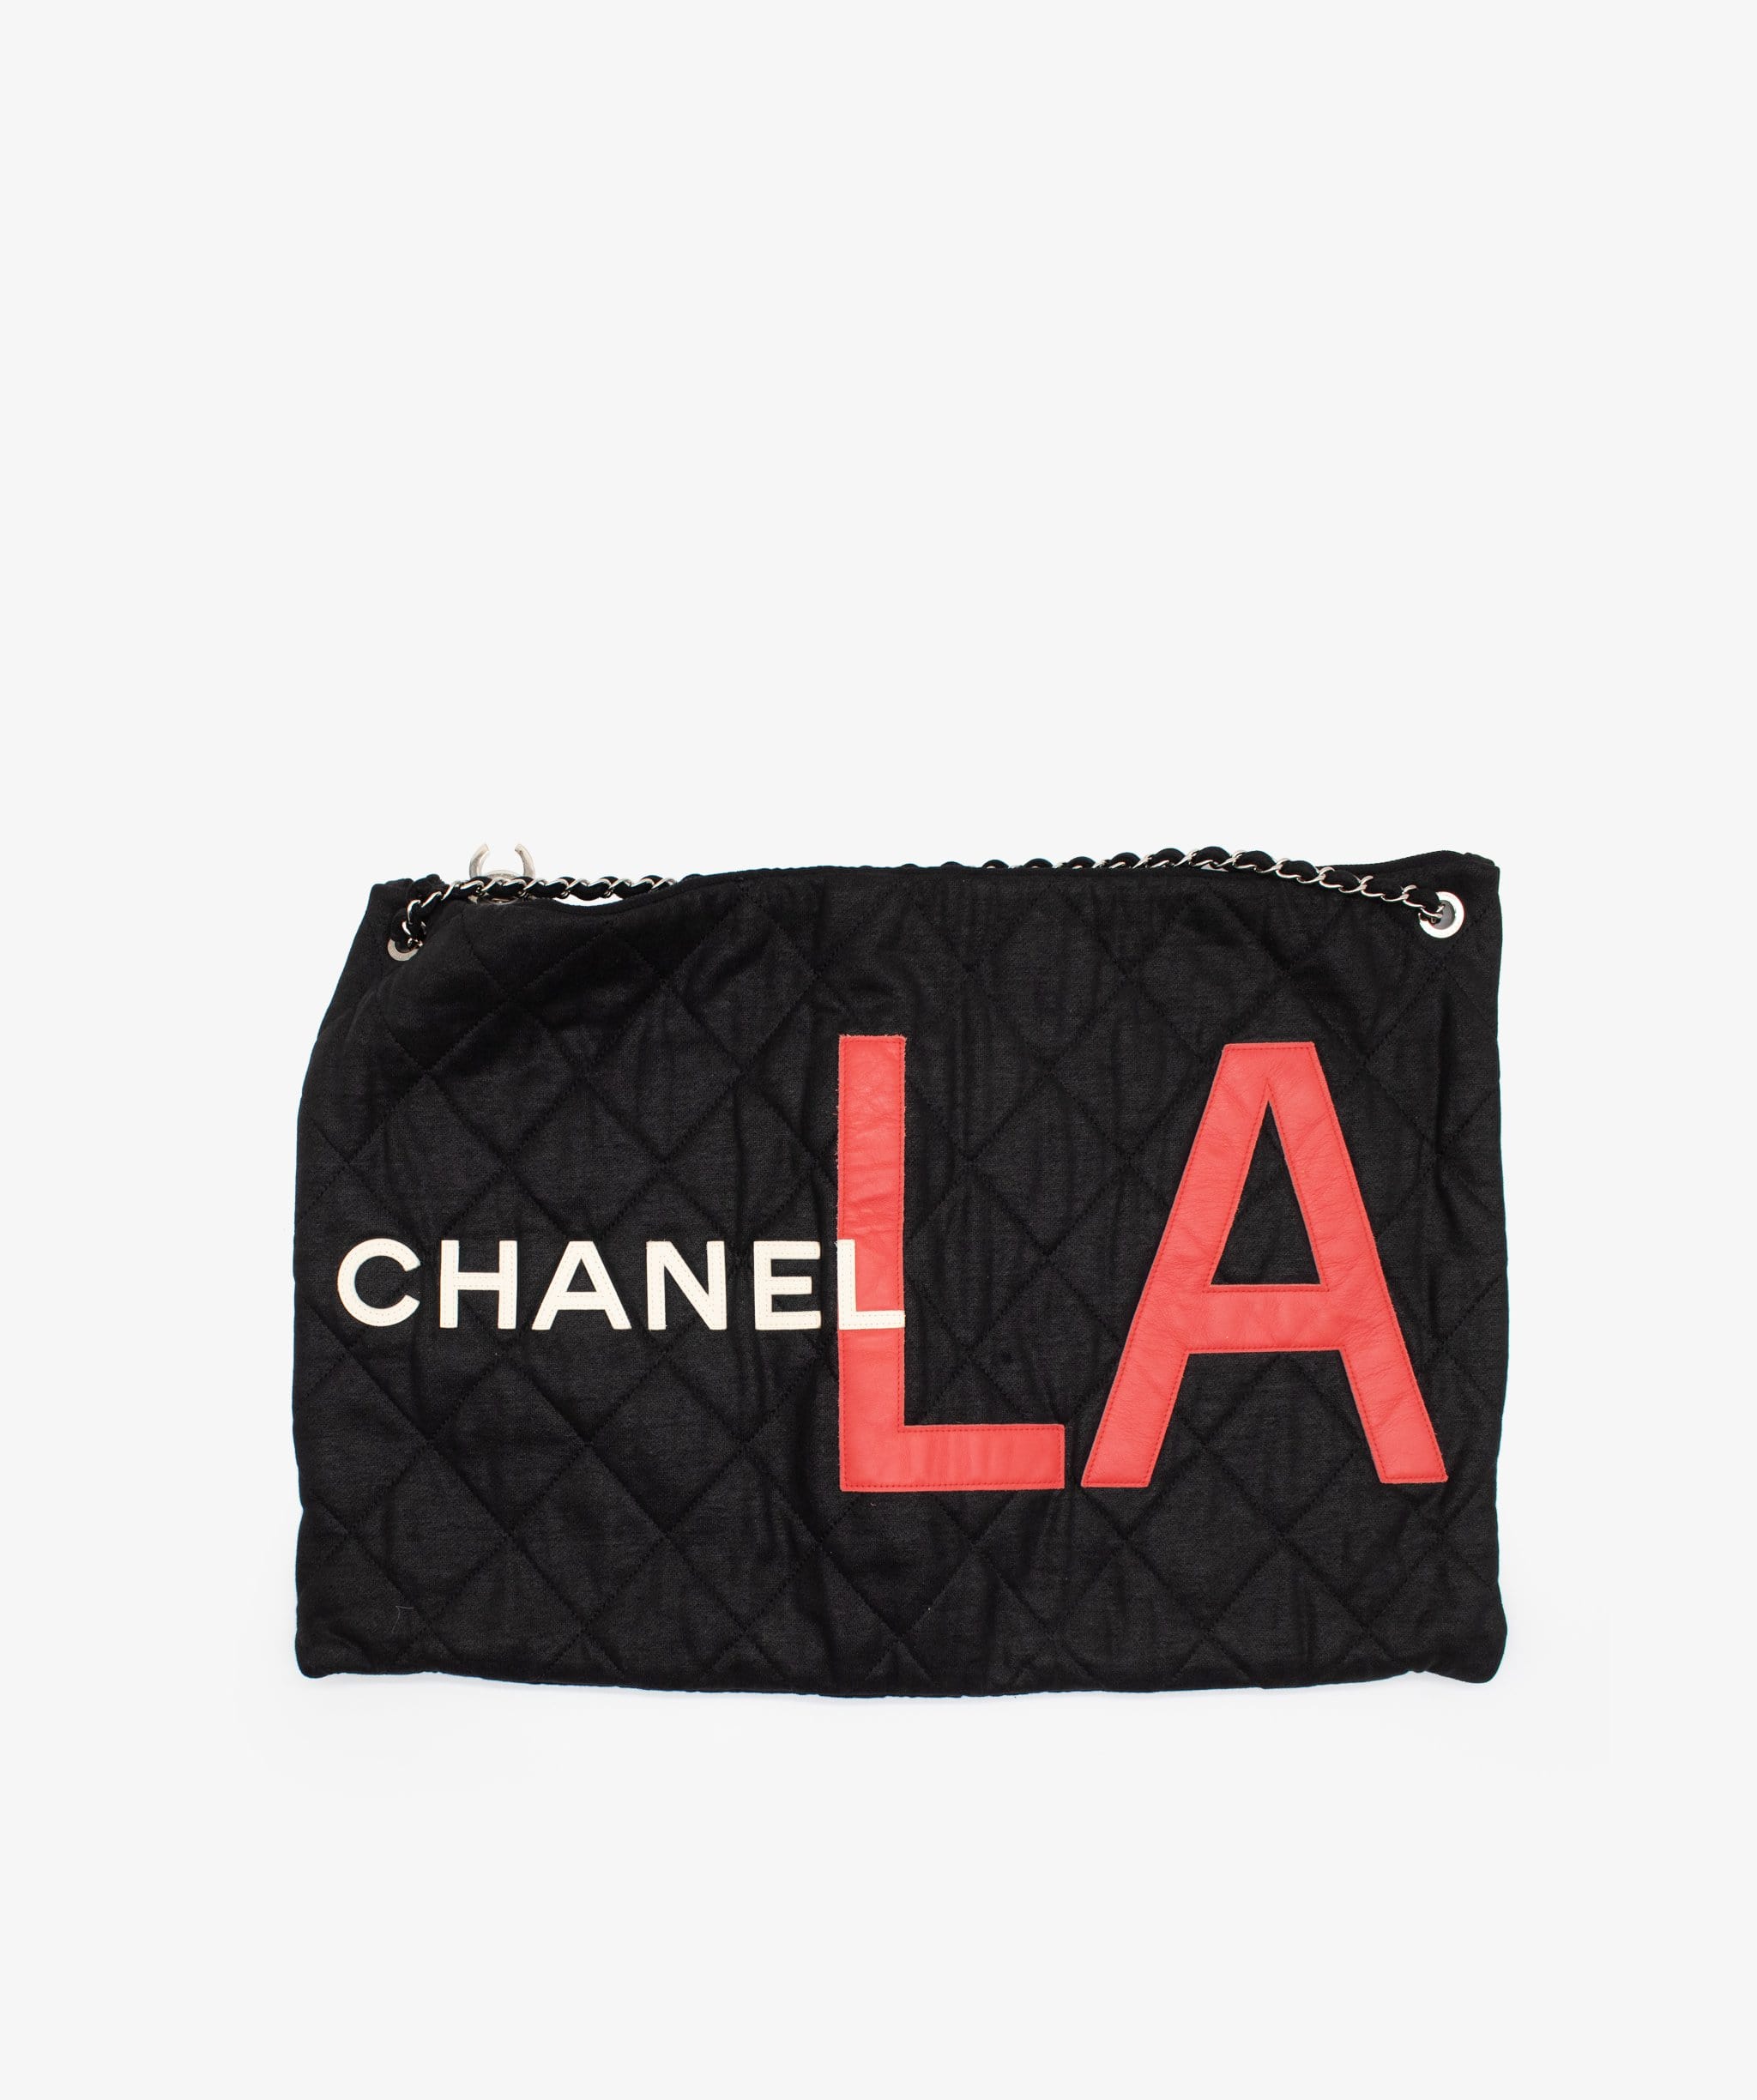 Chanel Chanel LA Cruise Chain Shoulder Bag